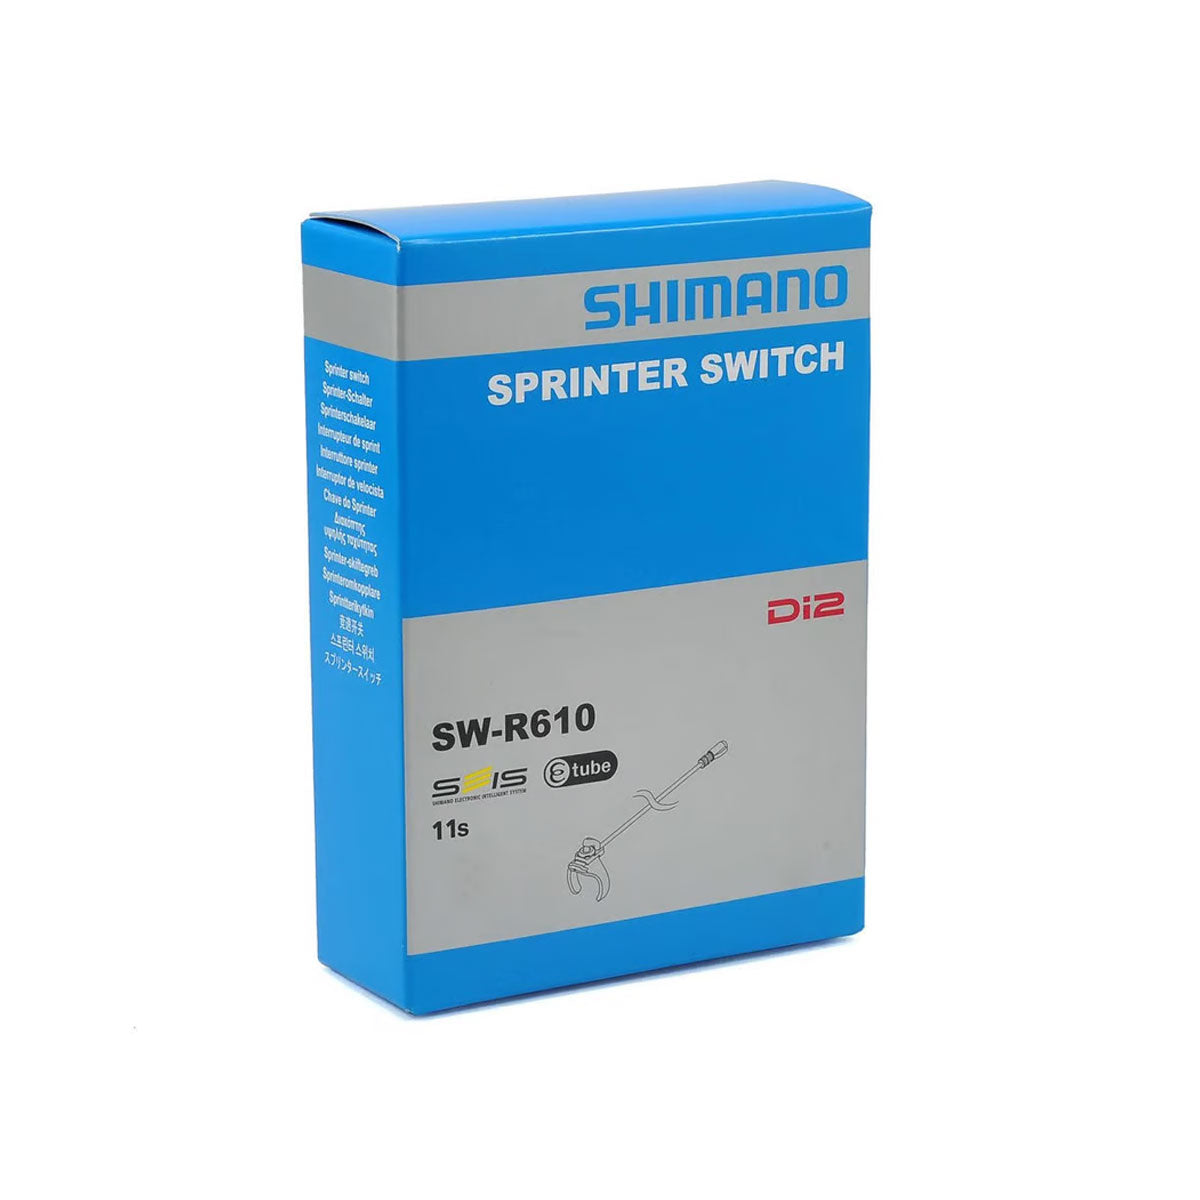 DI2 SW-R610 Sprinter Switch